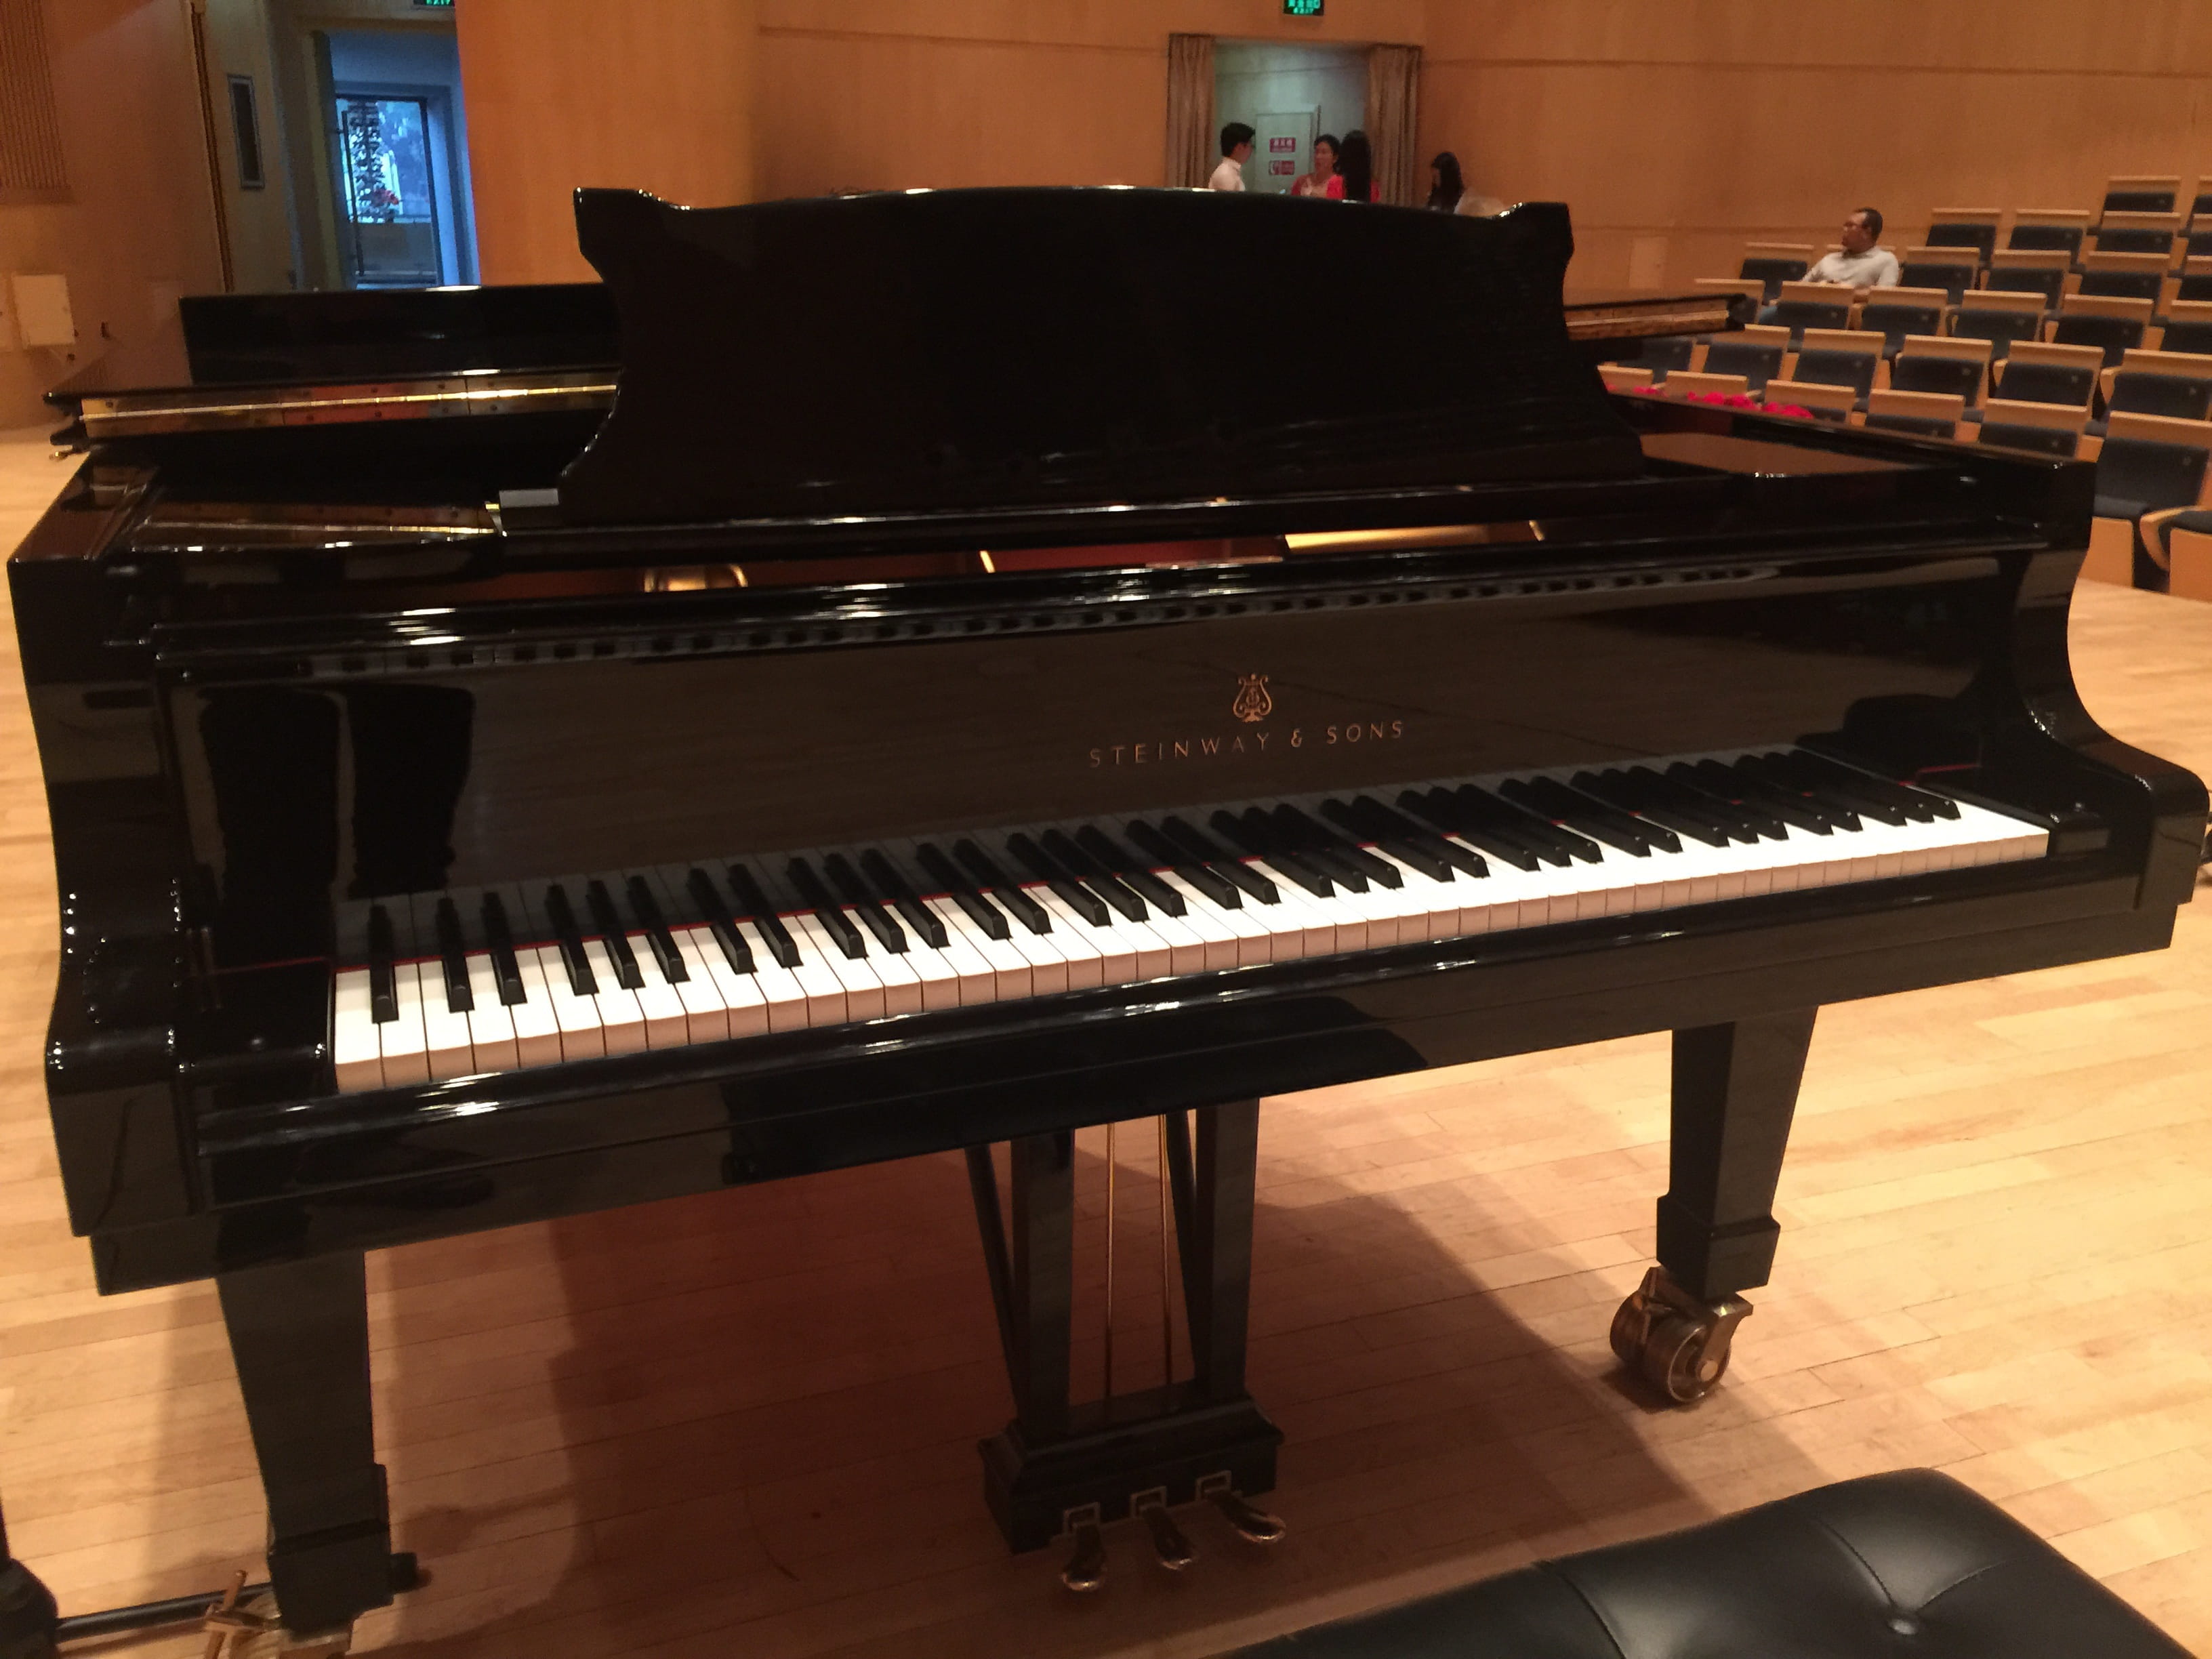 Piano, Steinway, concert hall, music, musical instrument, piano key